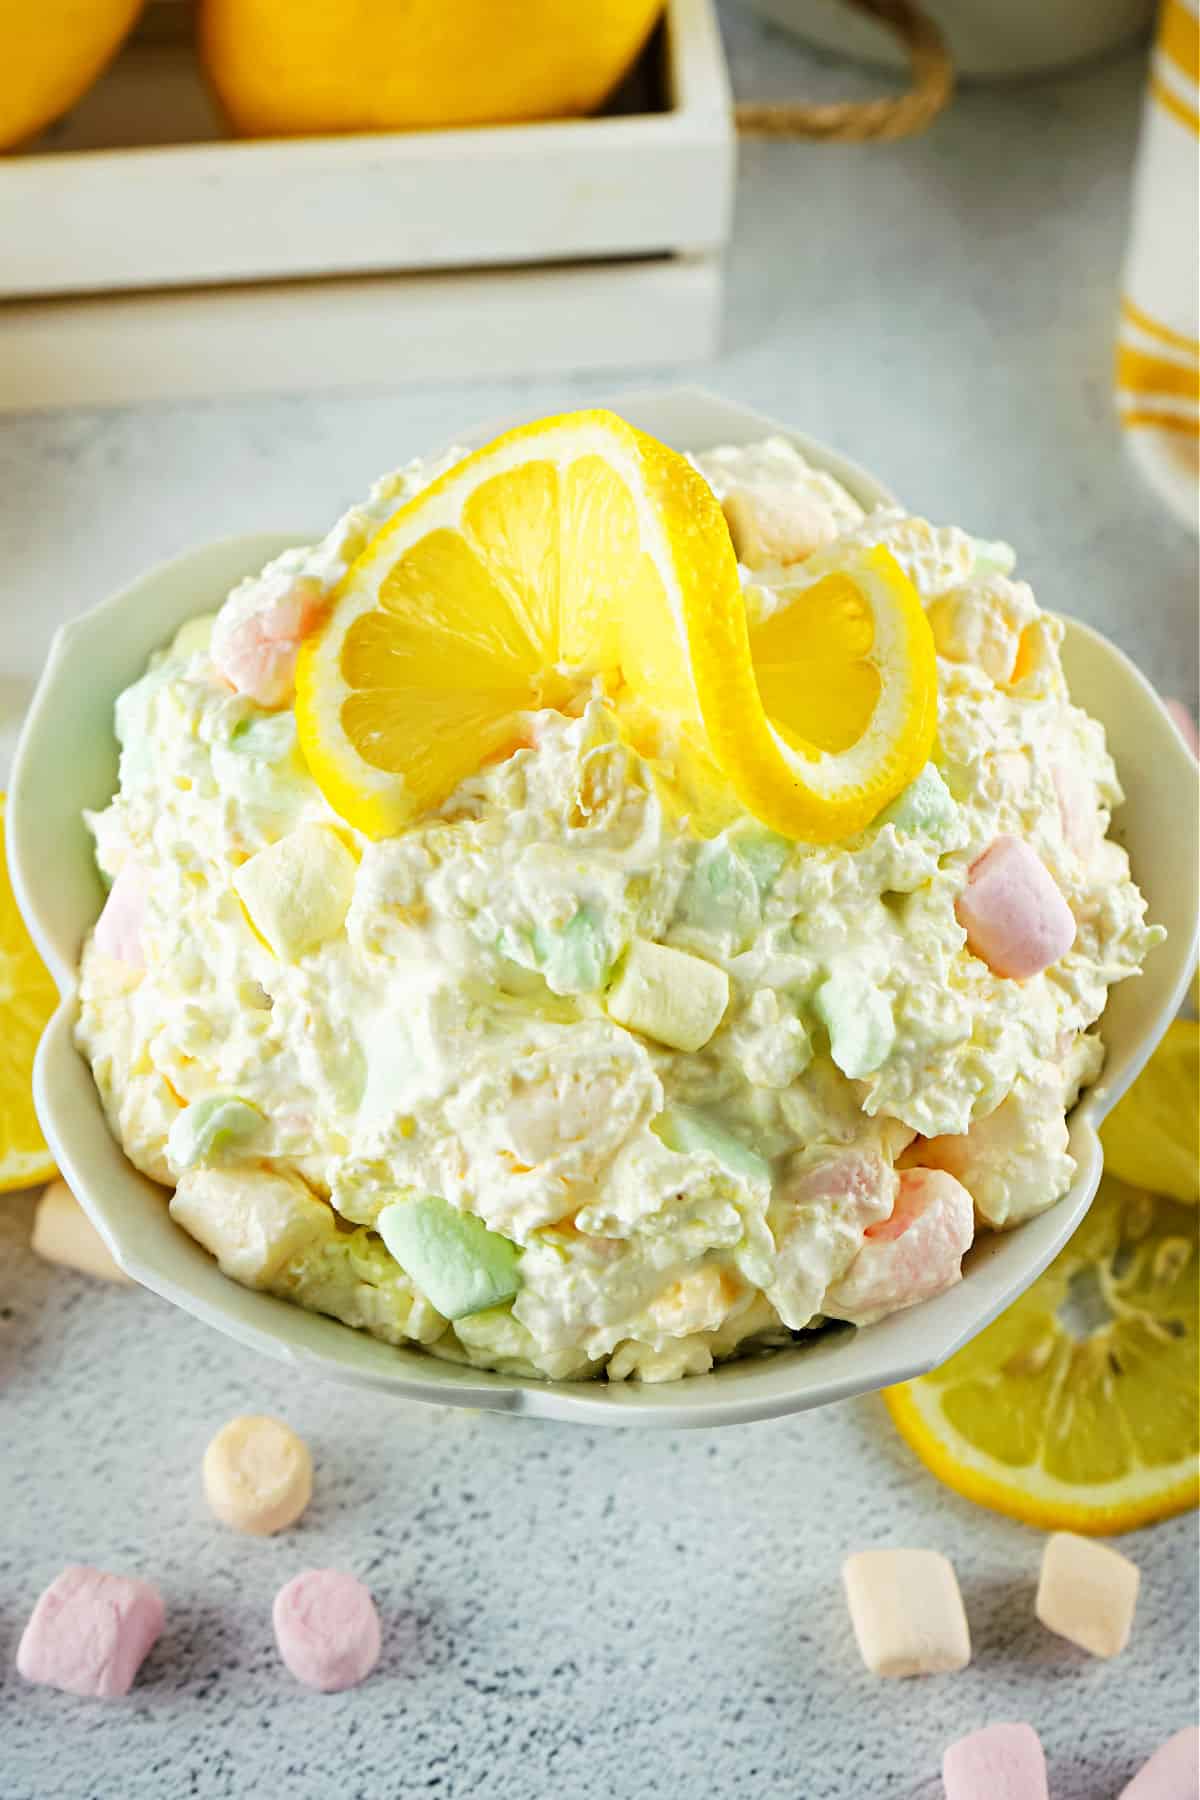 Lemon fluff salad in a white serving bowl.